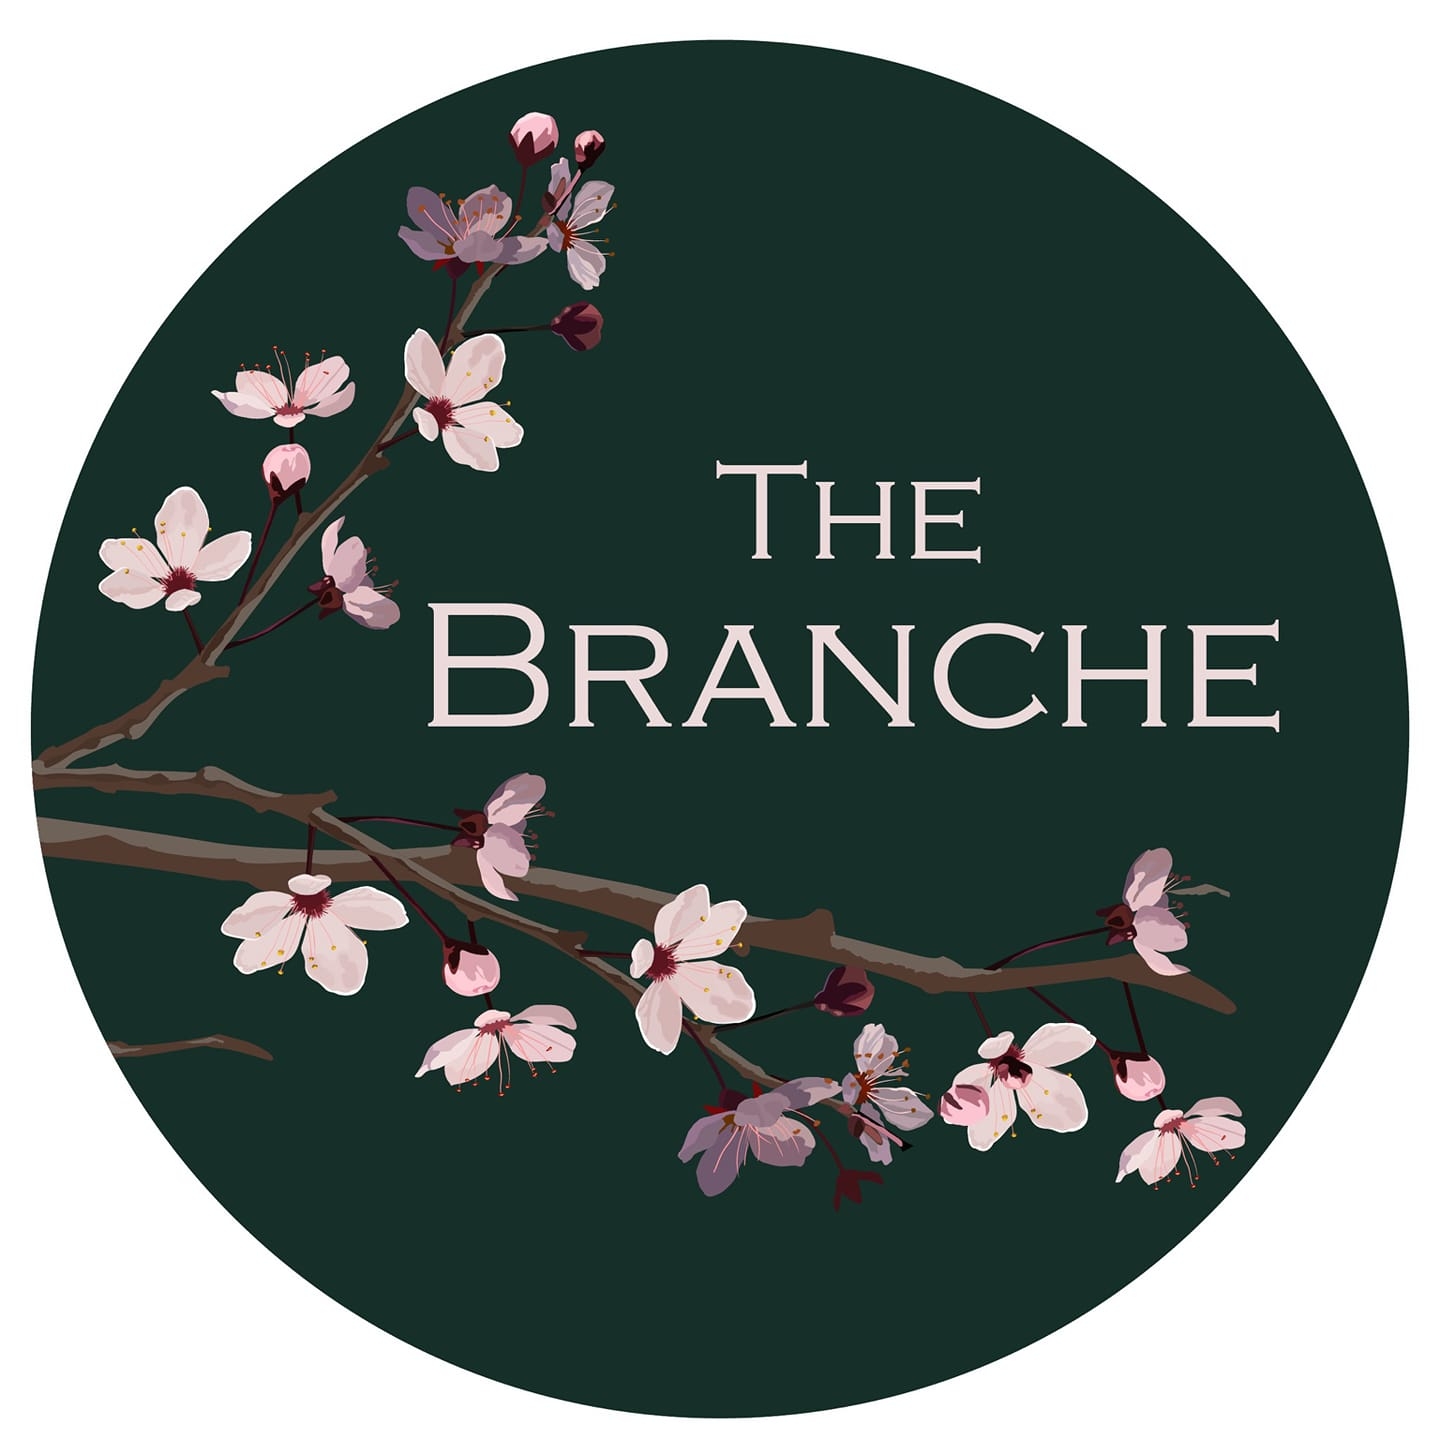 The branche